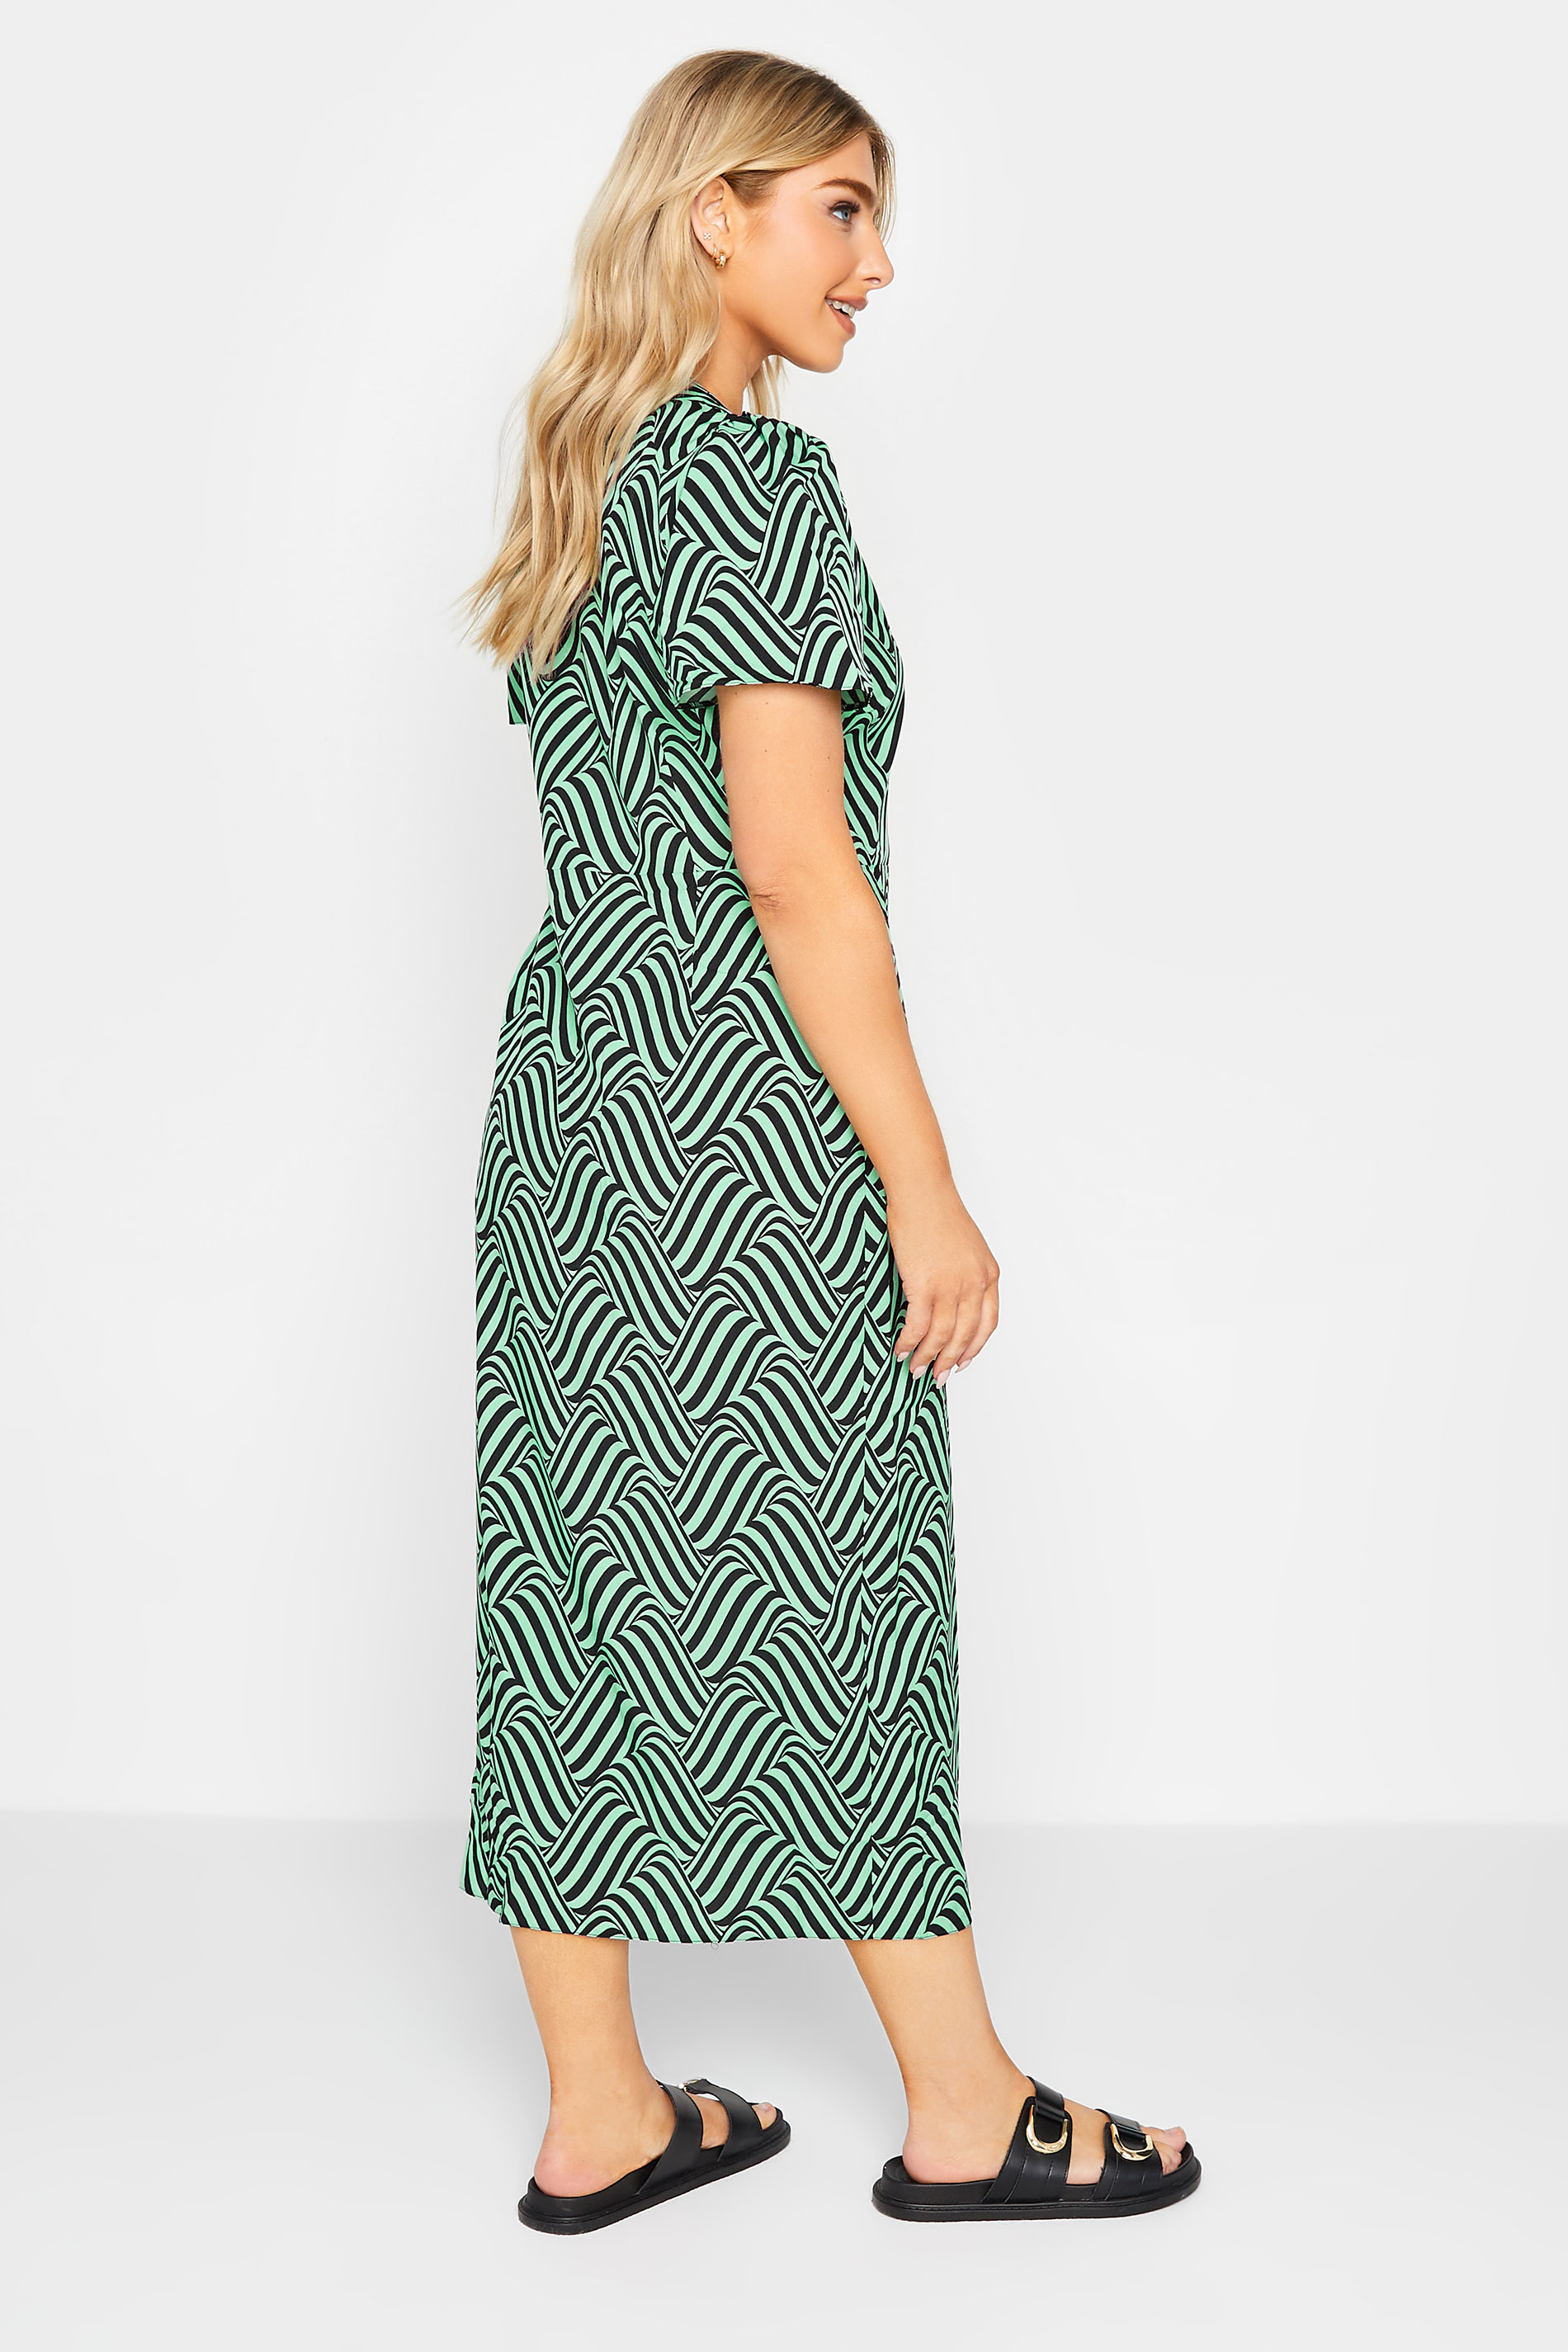 M&Co Green Abstract Stripe Wrap Dress | M&Co 3